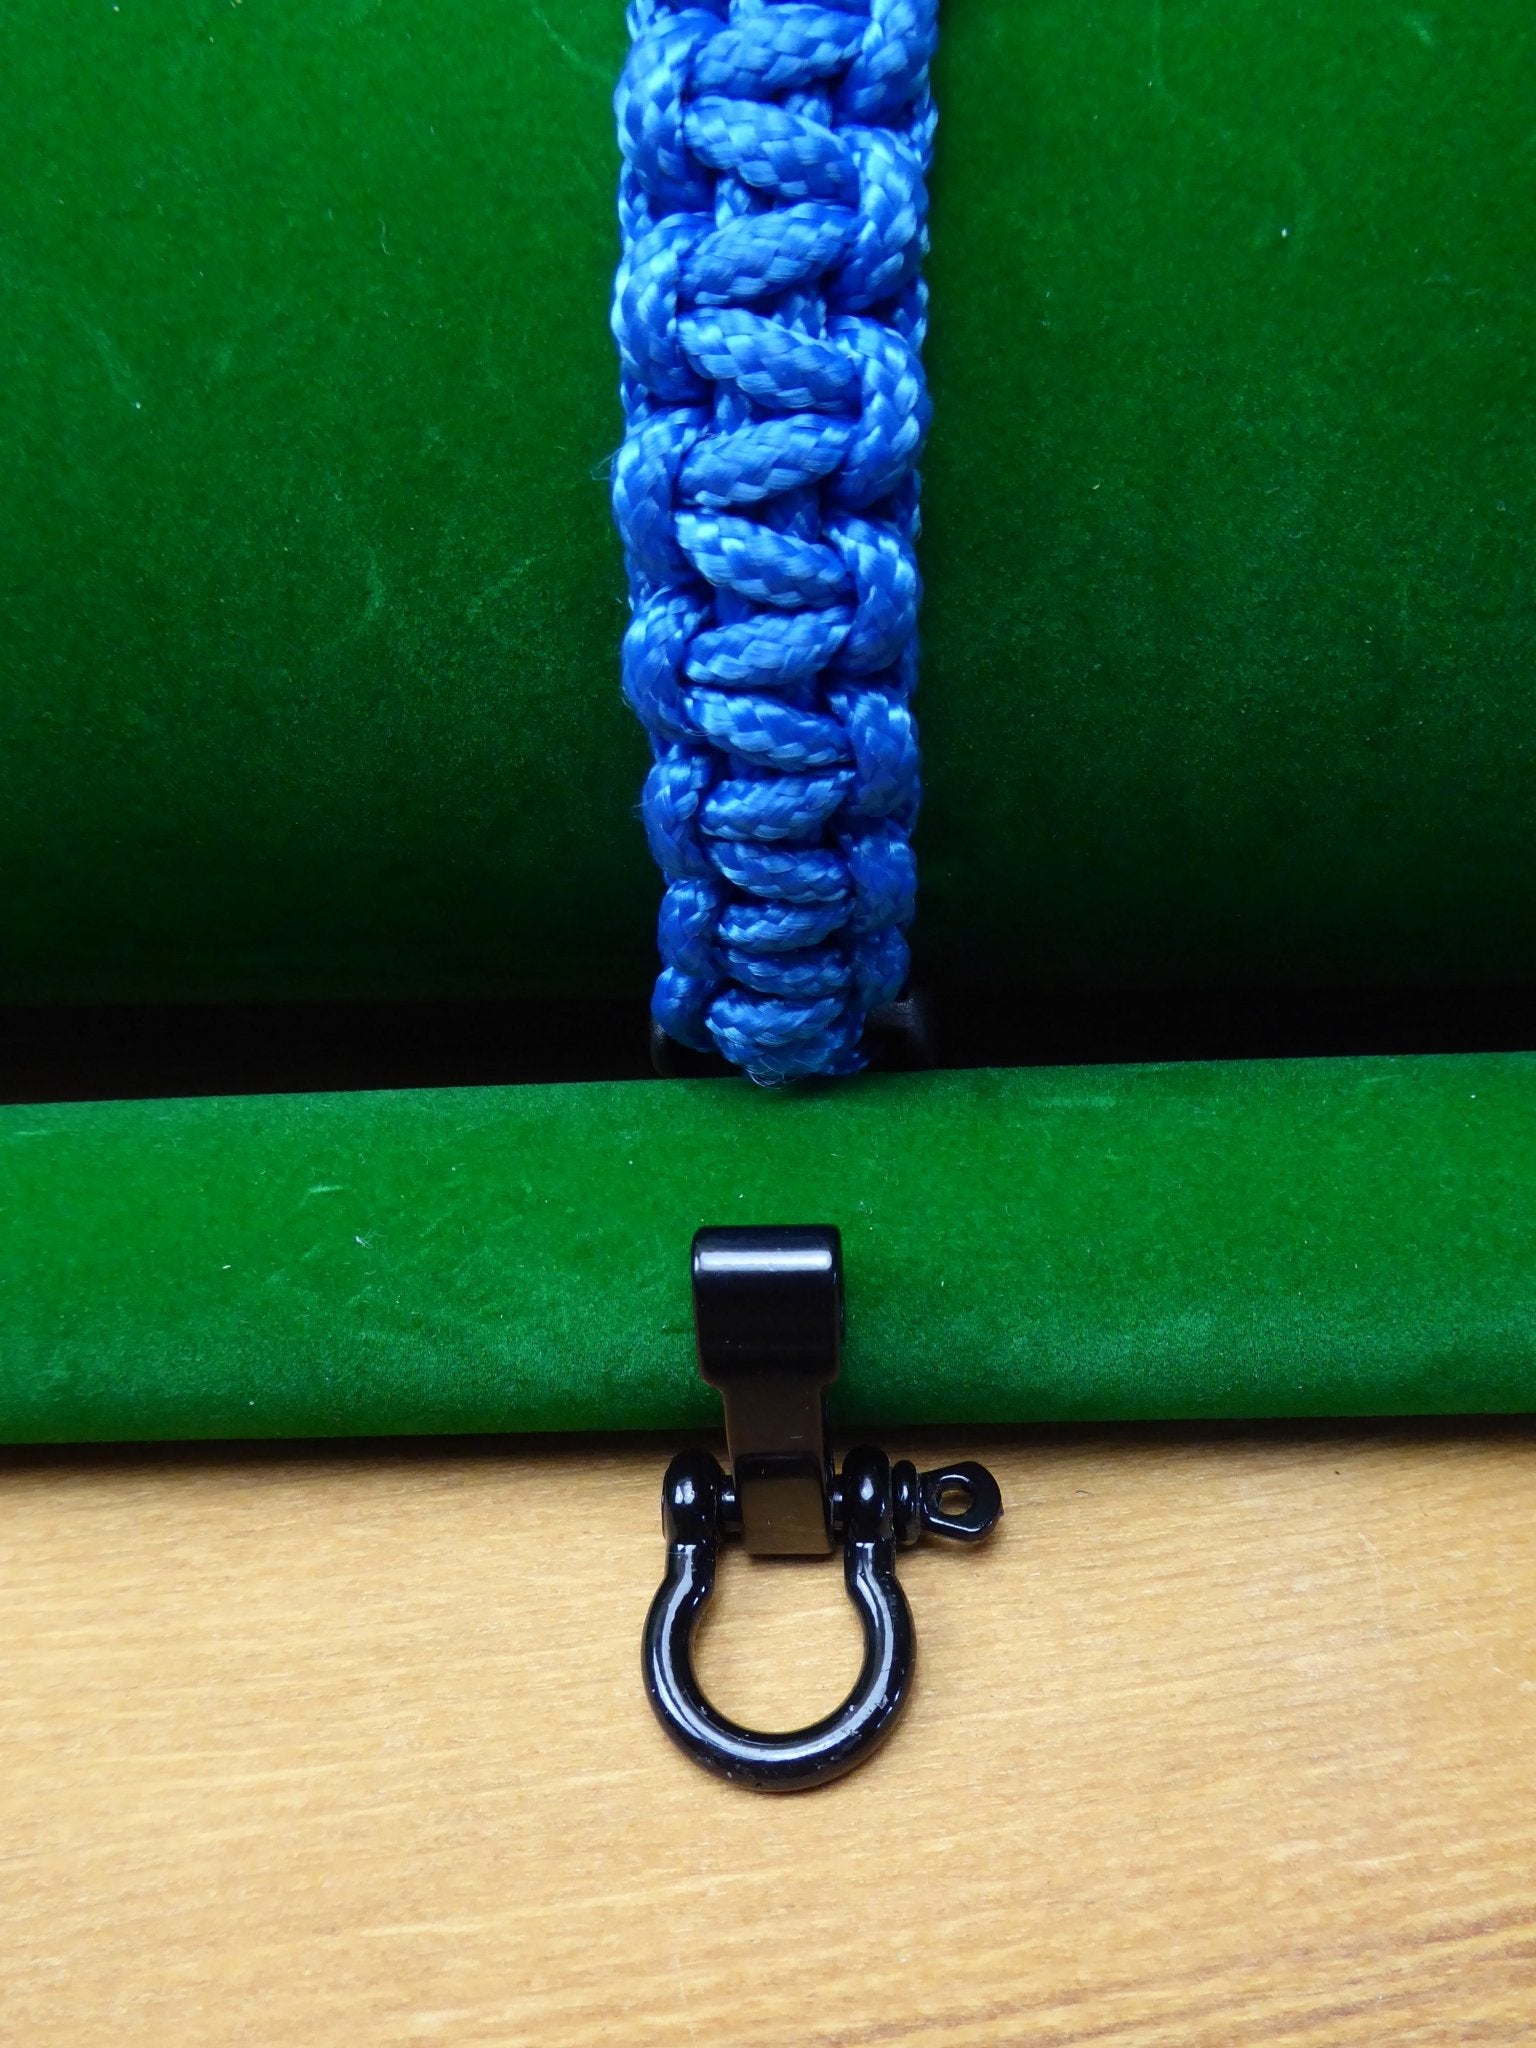 Paracord Buckle Bracelet kits with choice of colours Paracord Huggins Attic Blue Shiny Black Buckle  [Huggins attic]